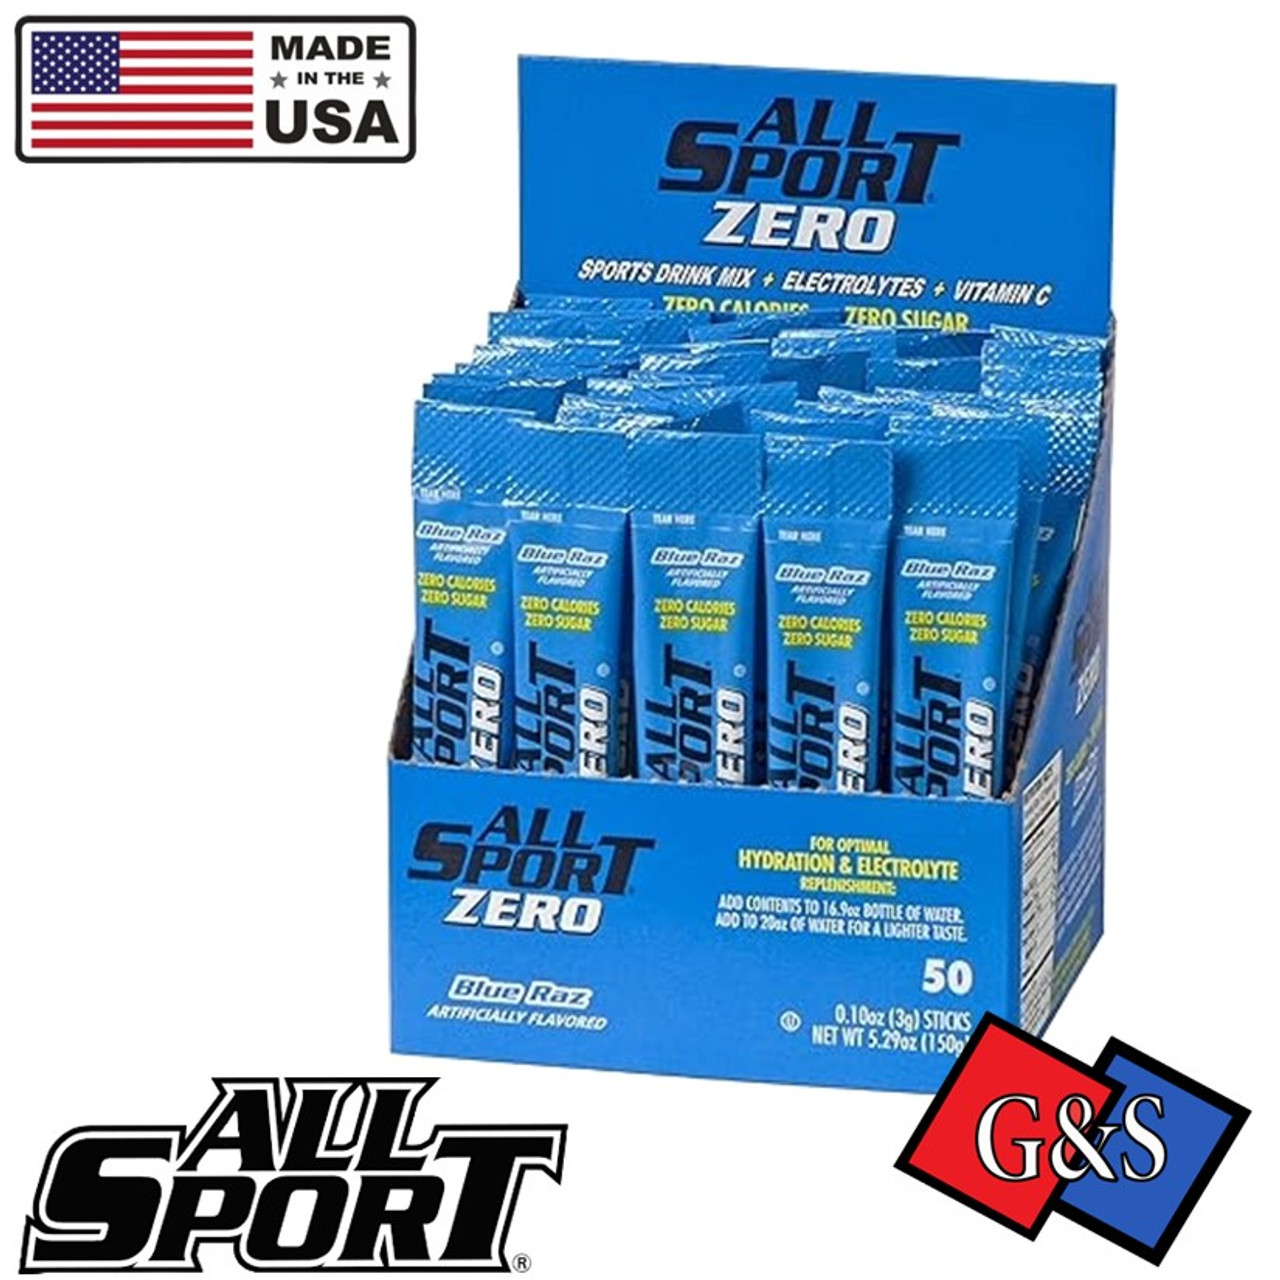 All Sport Powder Hydration Stick,(BLUE RAZ )Zero Calorie, Performance Electrolyte Drink Mix, Sugar Free, 2x Potassium, 50 CT